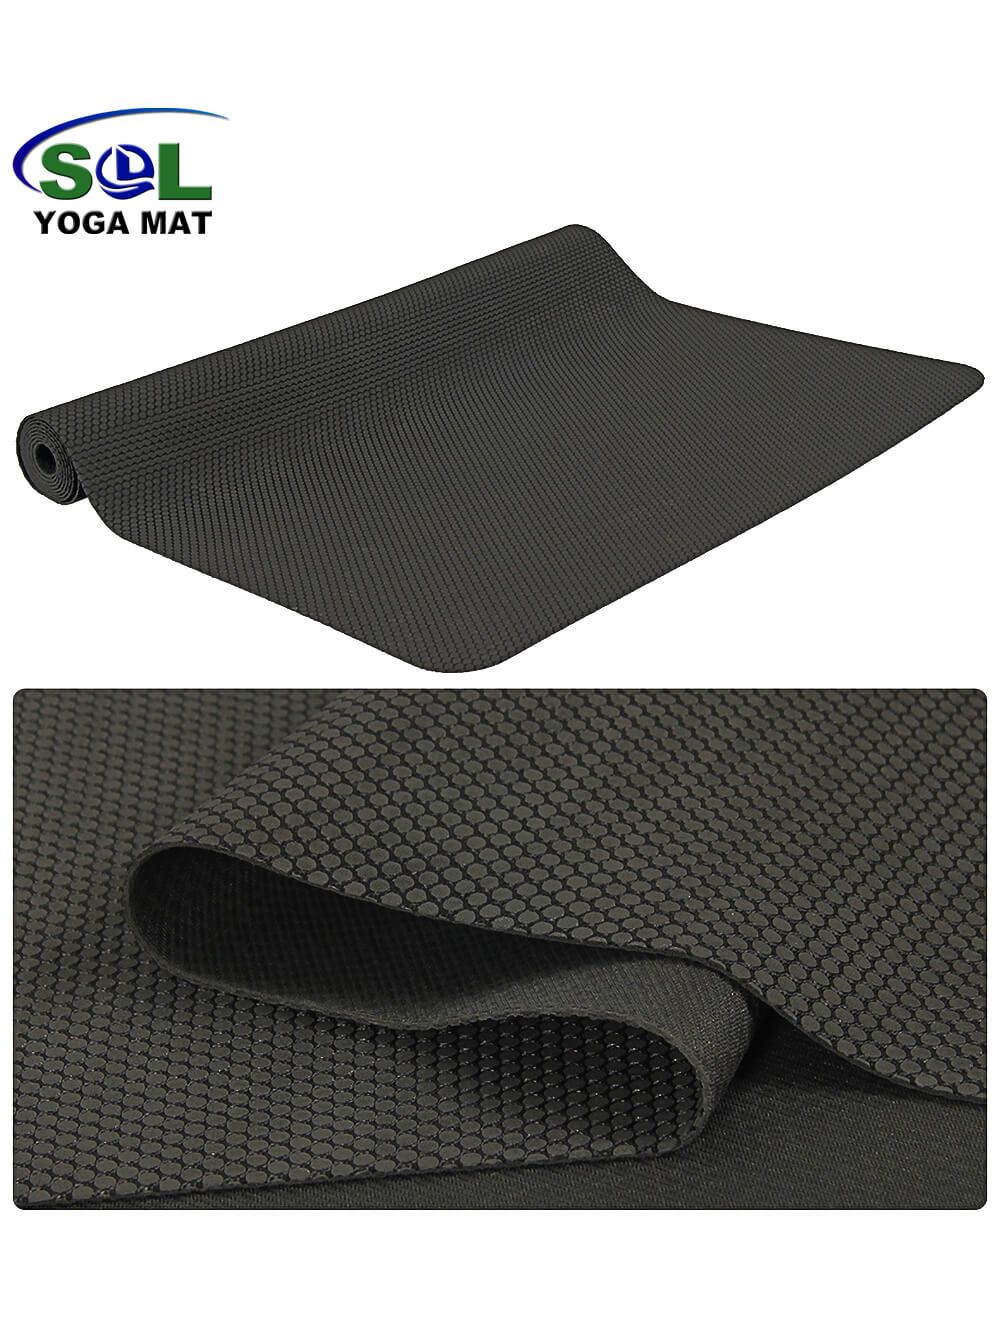 5mm Grid layer bottom 100% rubber yoga mat